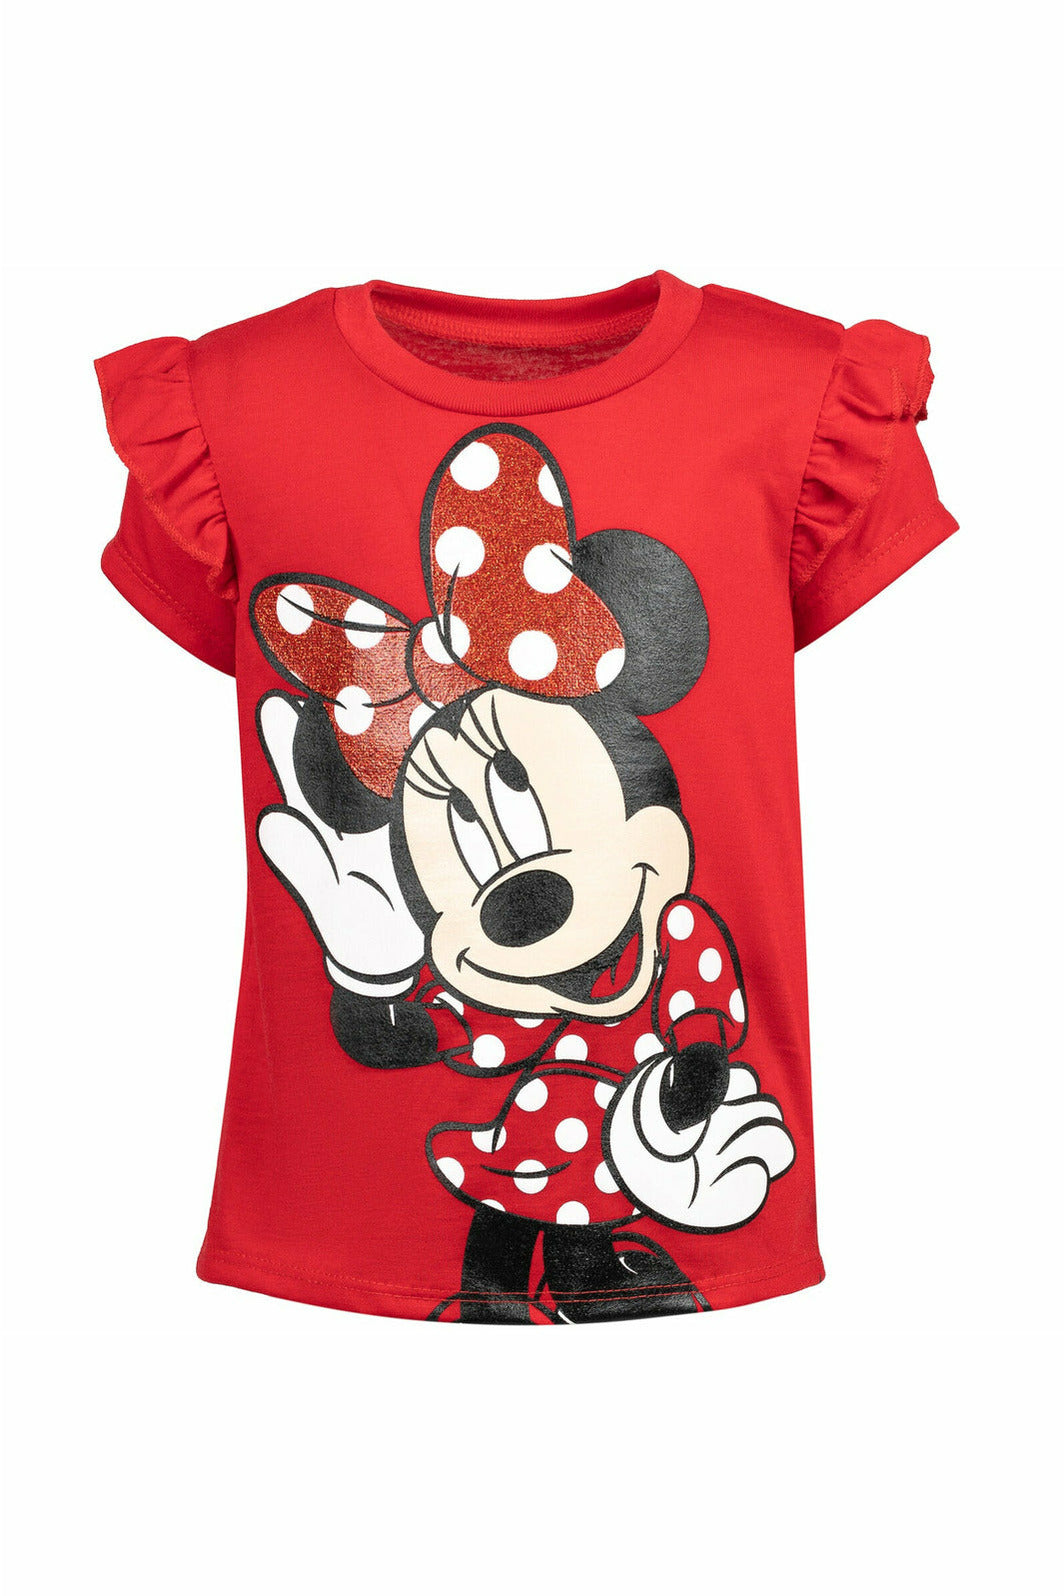 Minnie Mouse Ruffle Graphic T-Shirt & Leggings